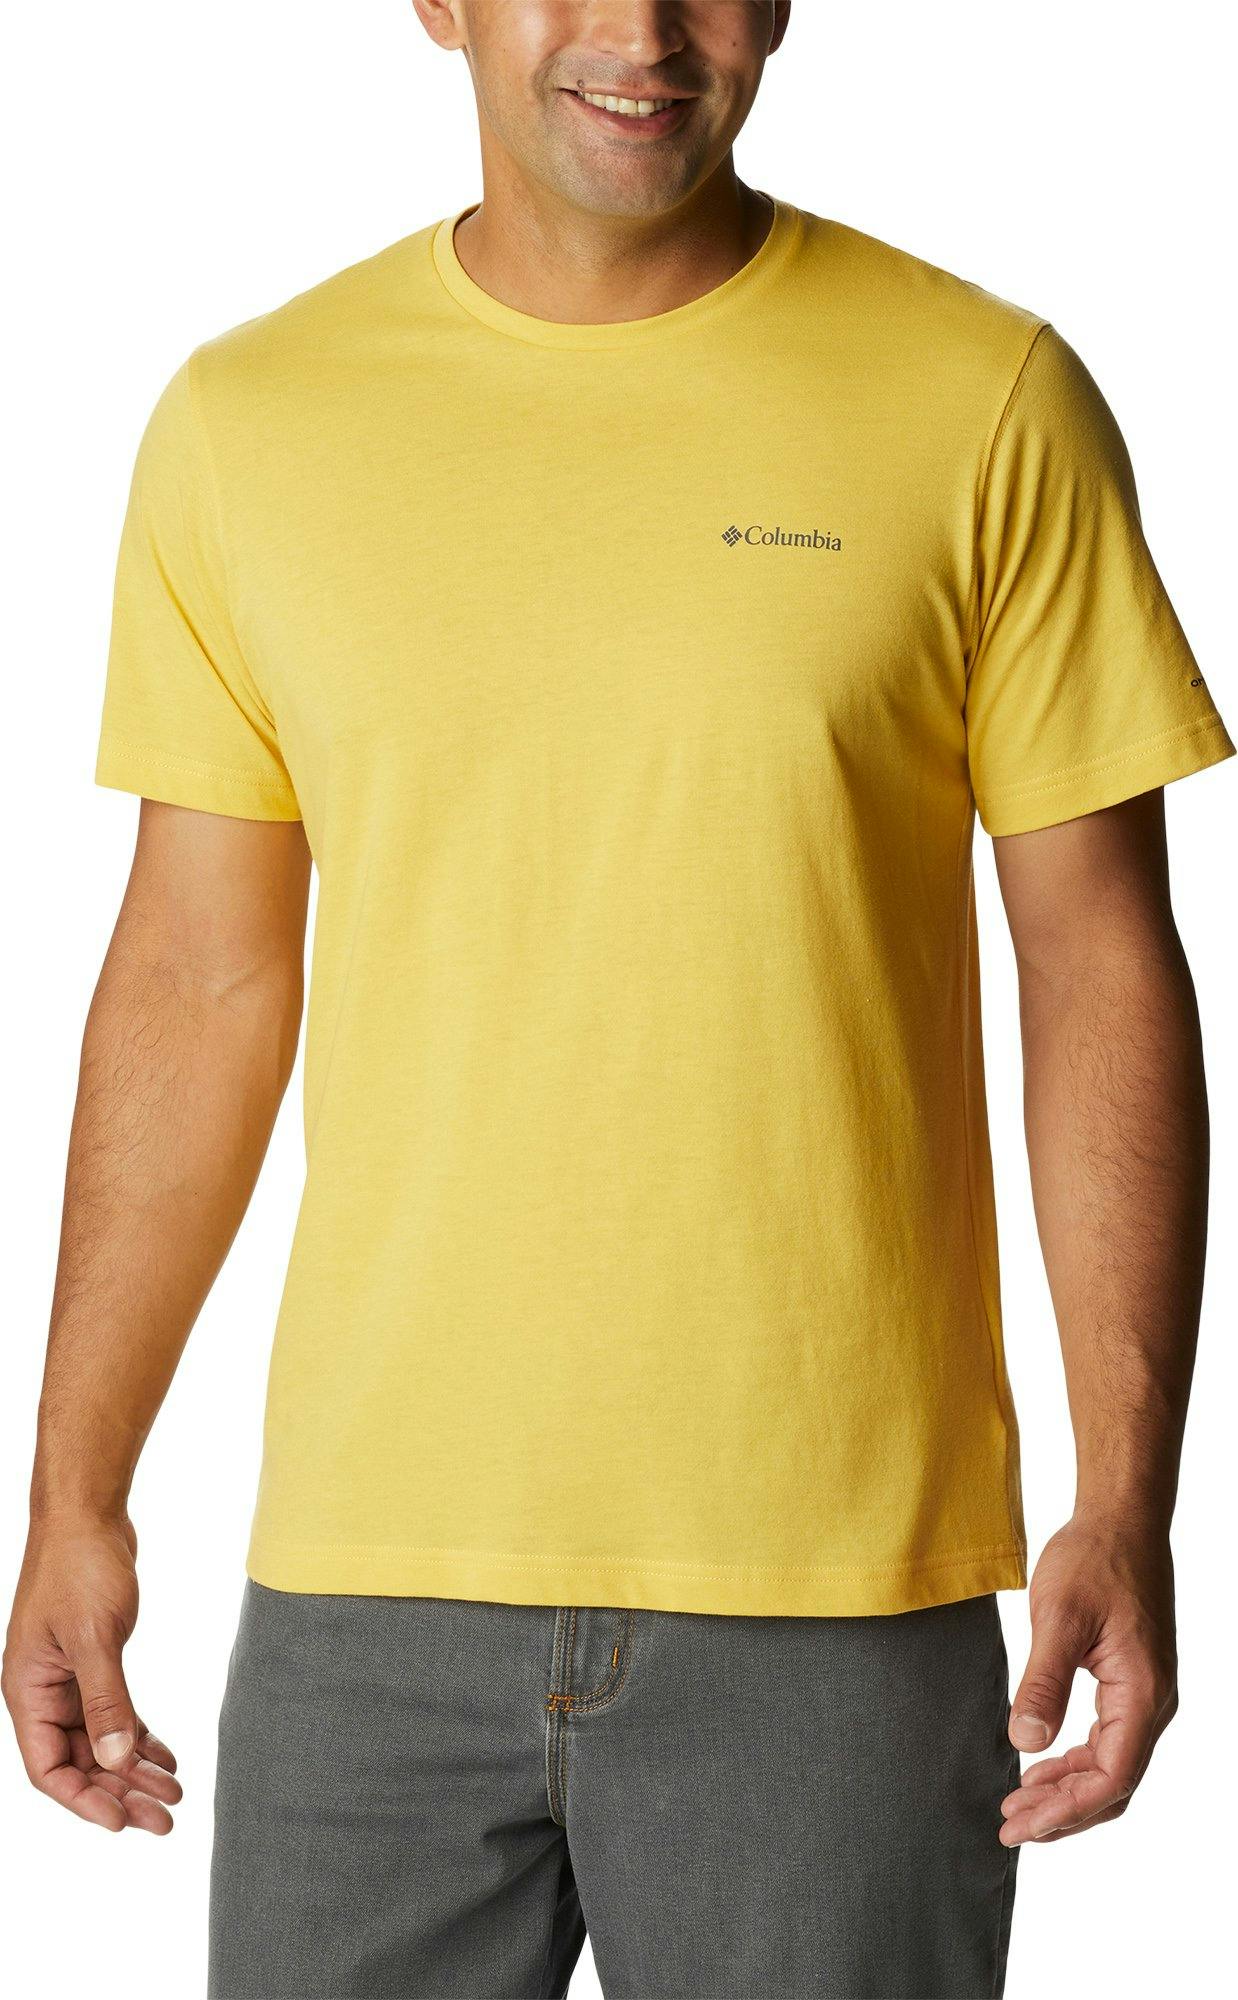 Product image for Thistletown Hills Short Sleeve T-Shirt - Men's